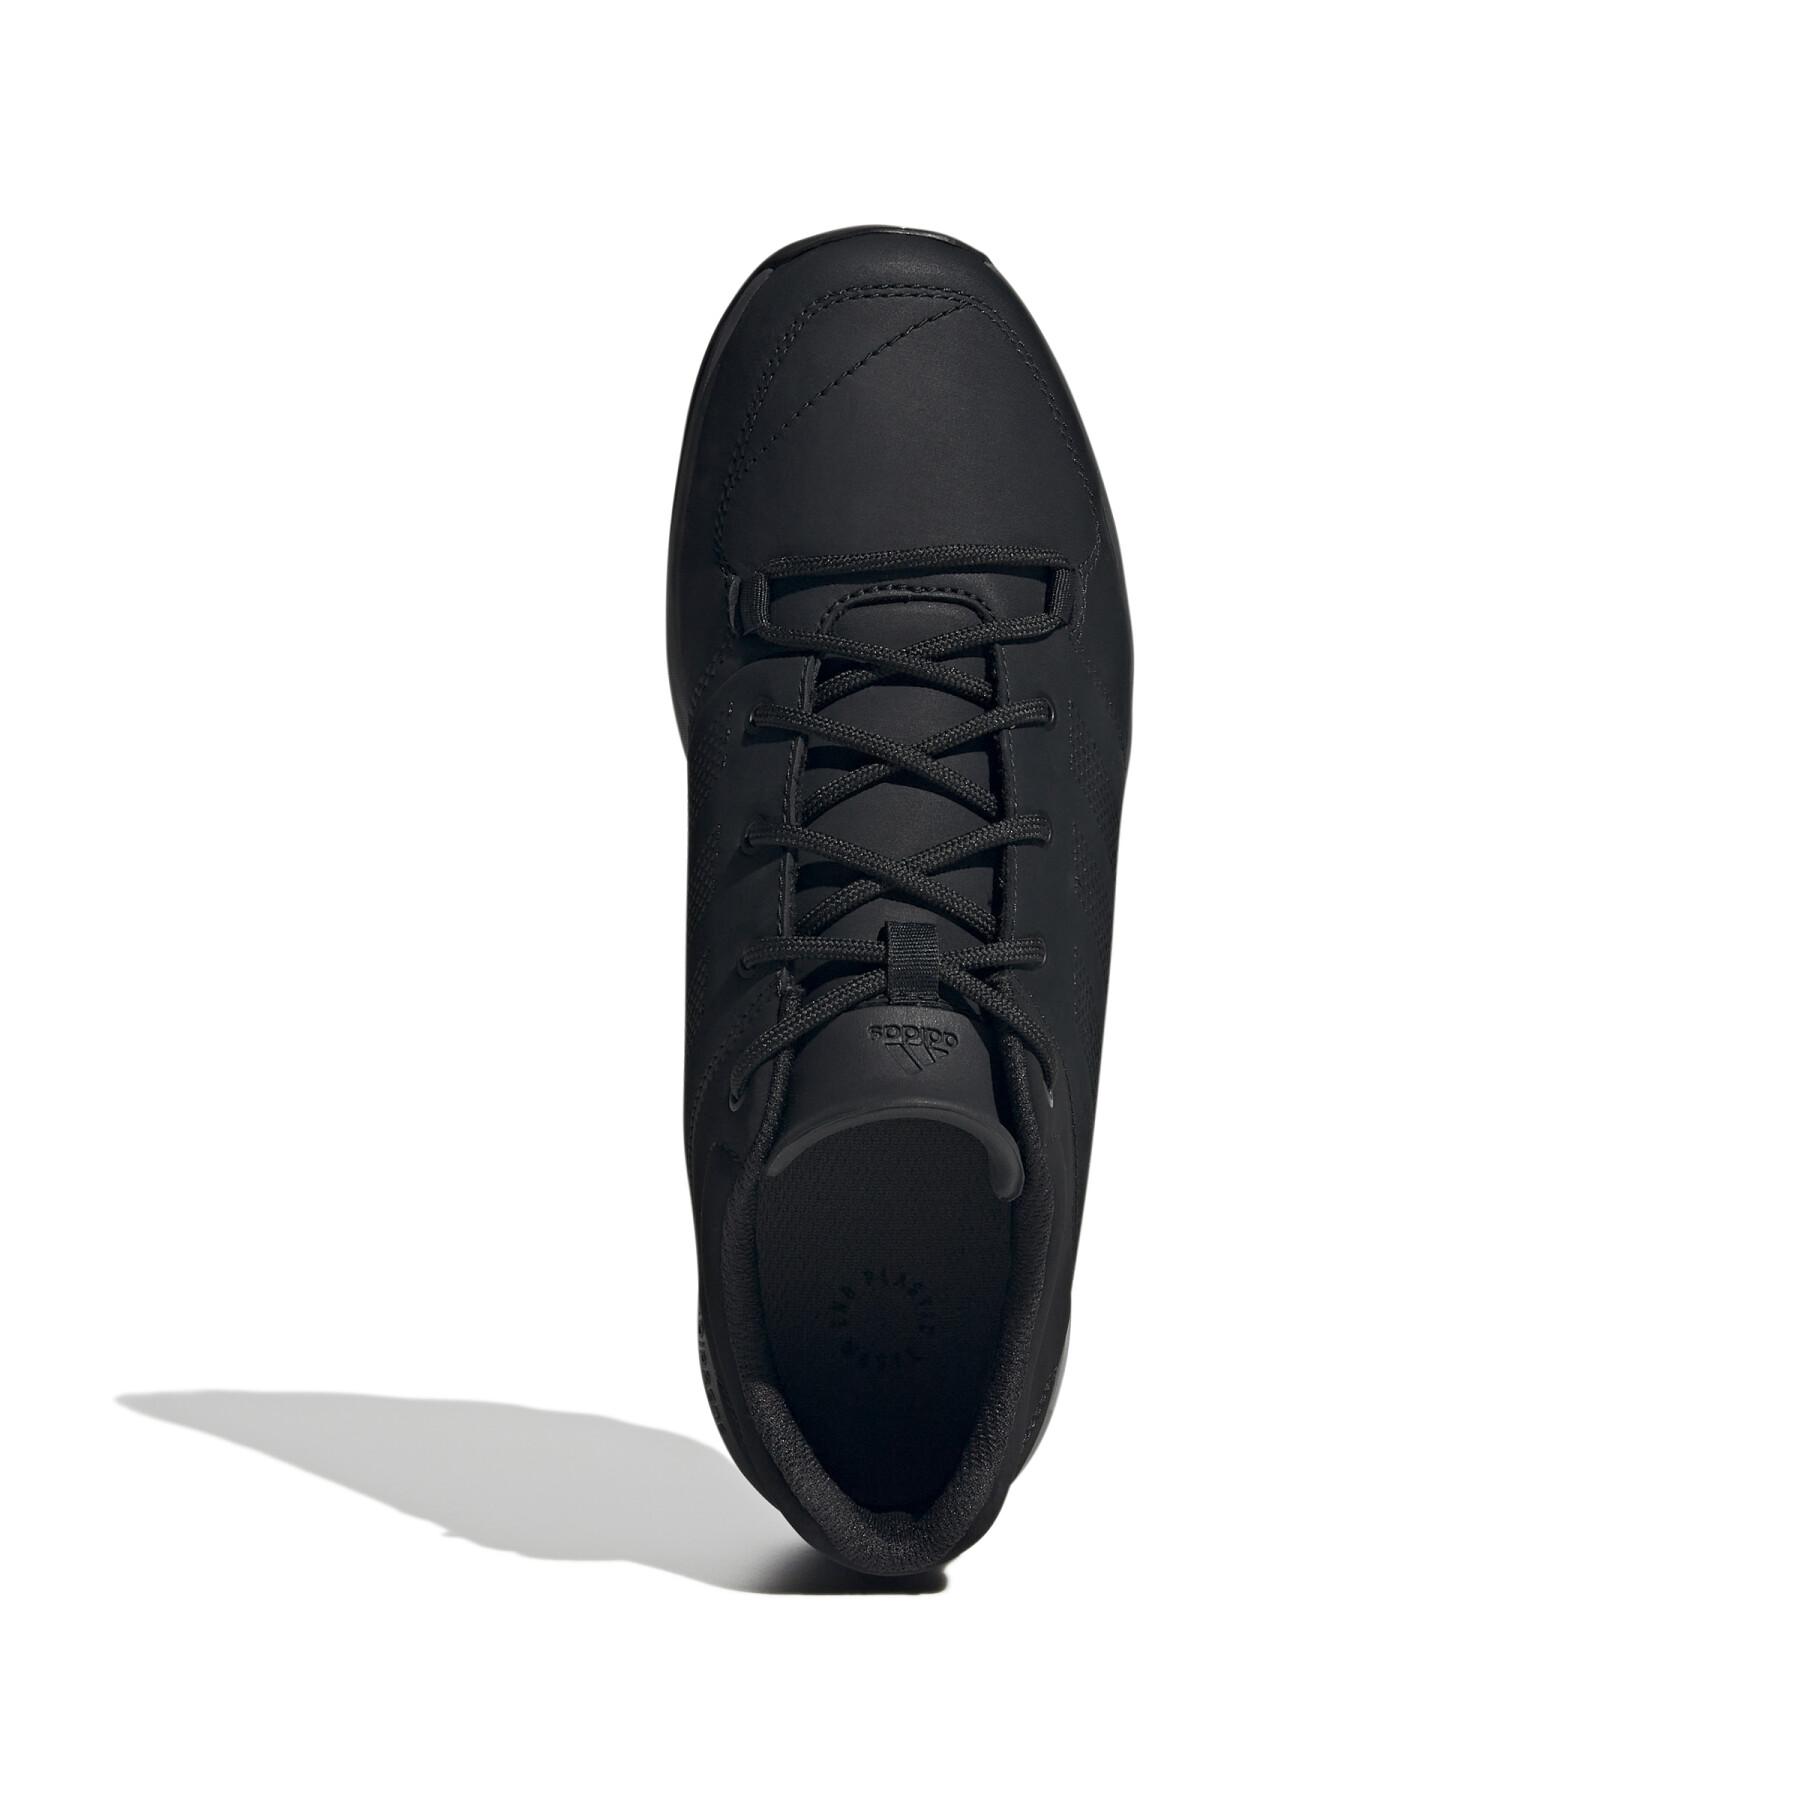 Hiking shoes adidas Terrex Daroga Plus Leather